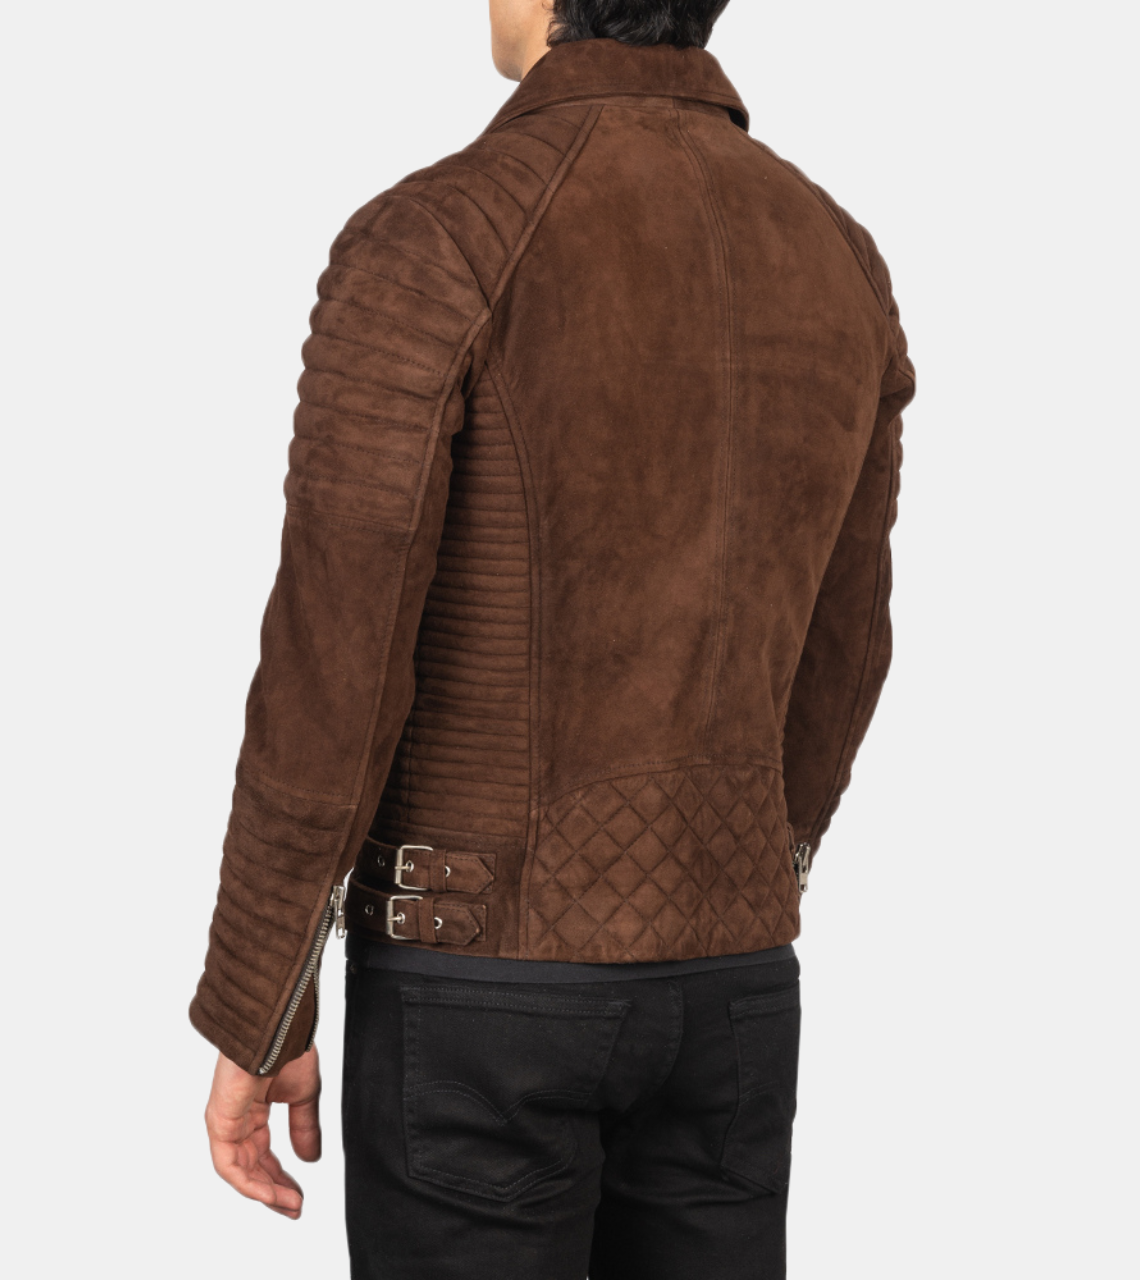  Guiliano Men's Brown Suede Leather Biker's Jacket Back